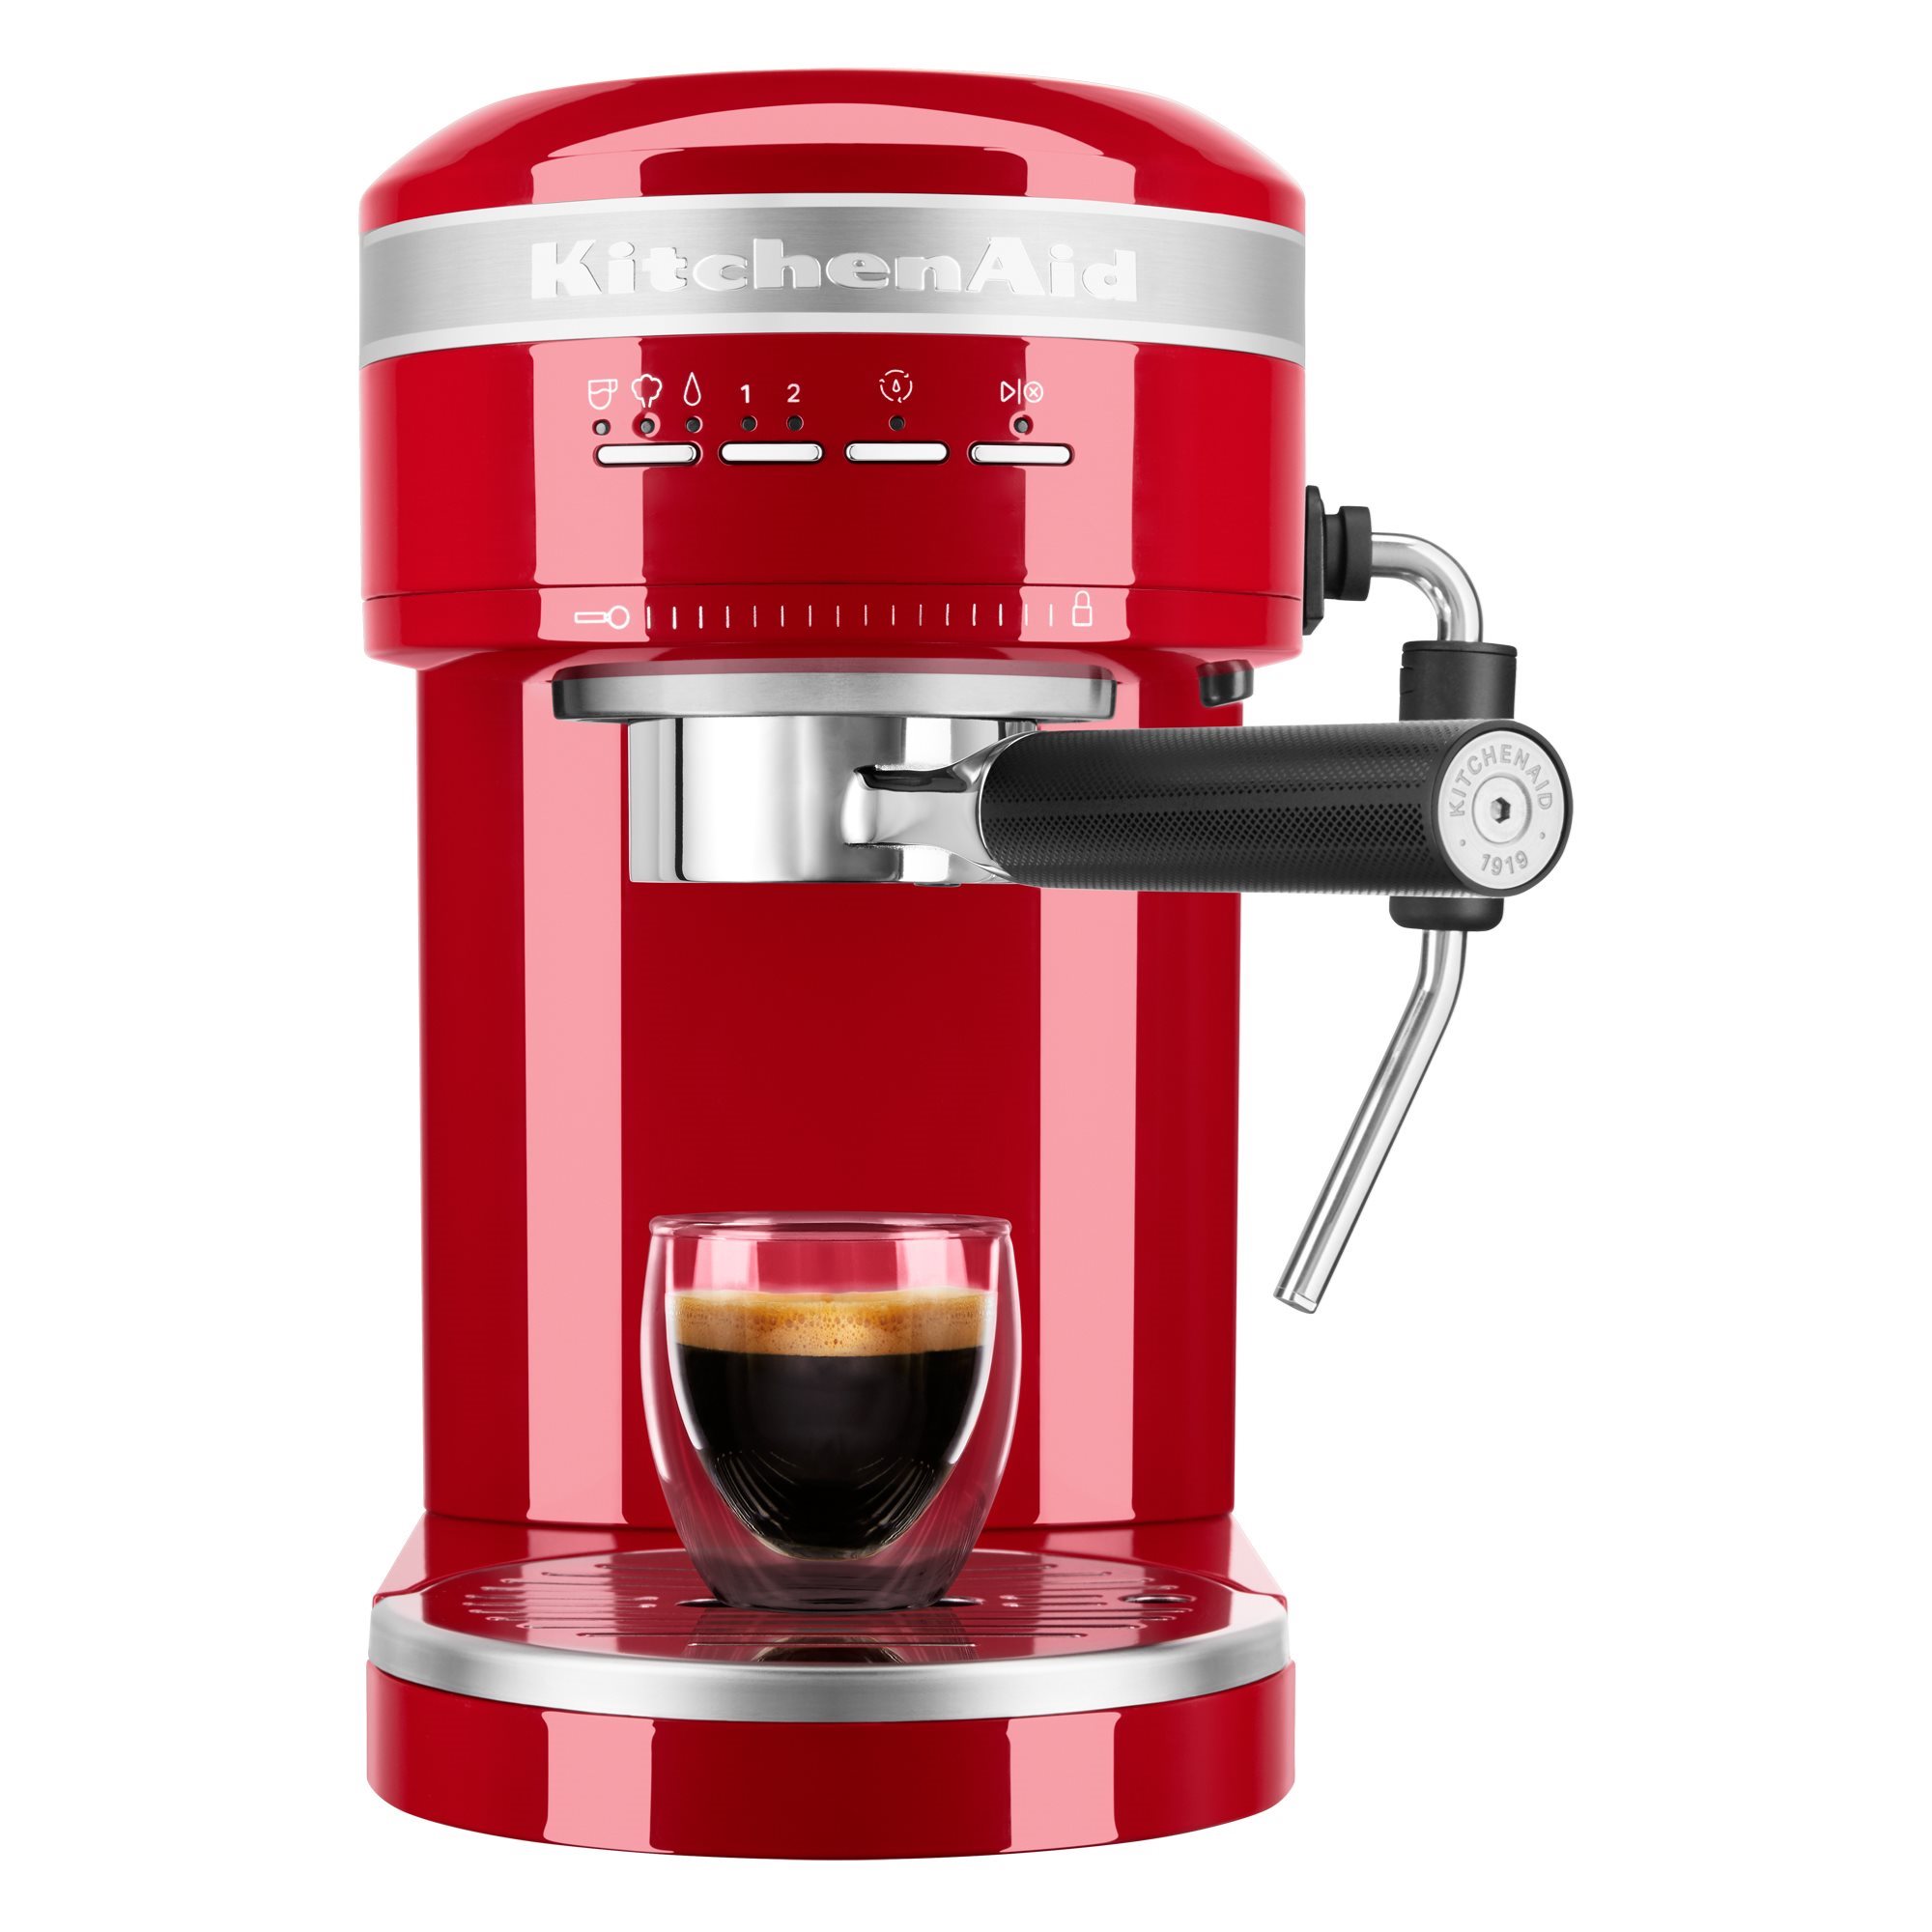 Artisan electric espresso machine, 1470W, Charcoal Gray color -  KitchenAid brand